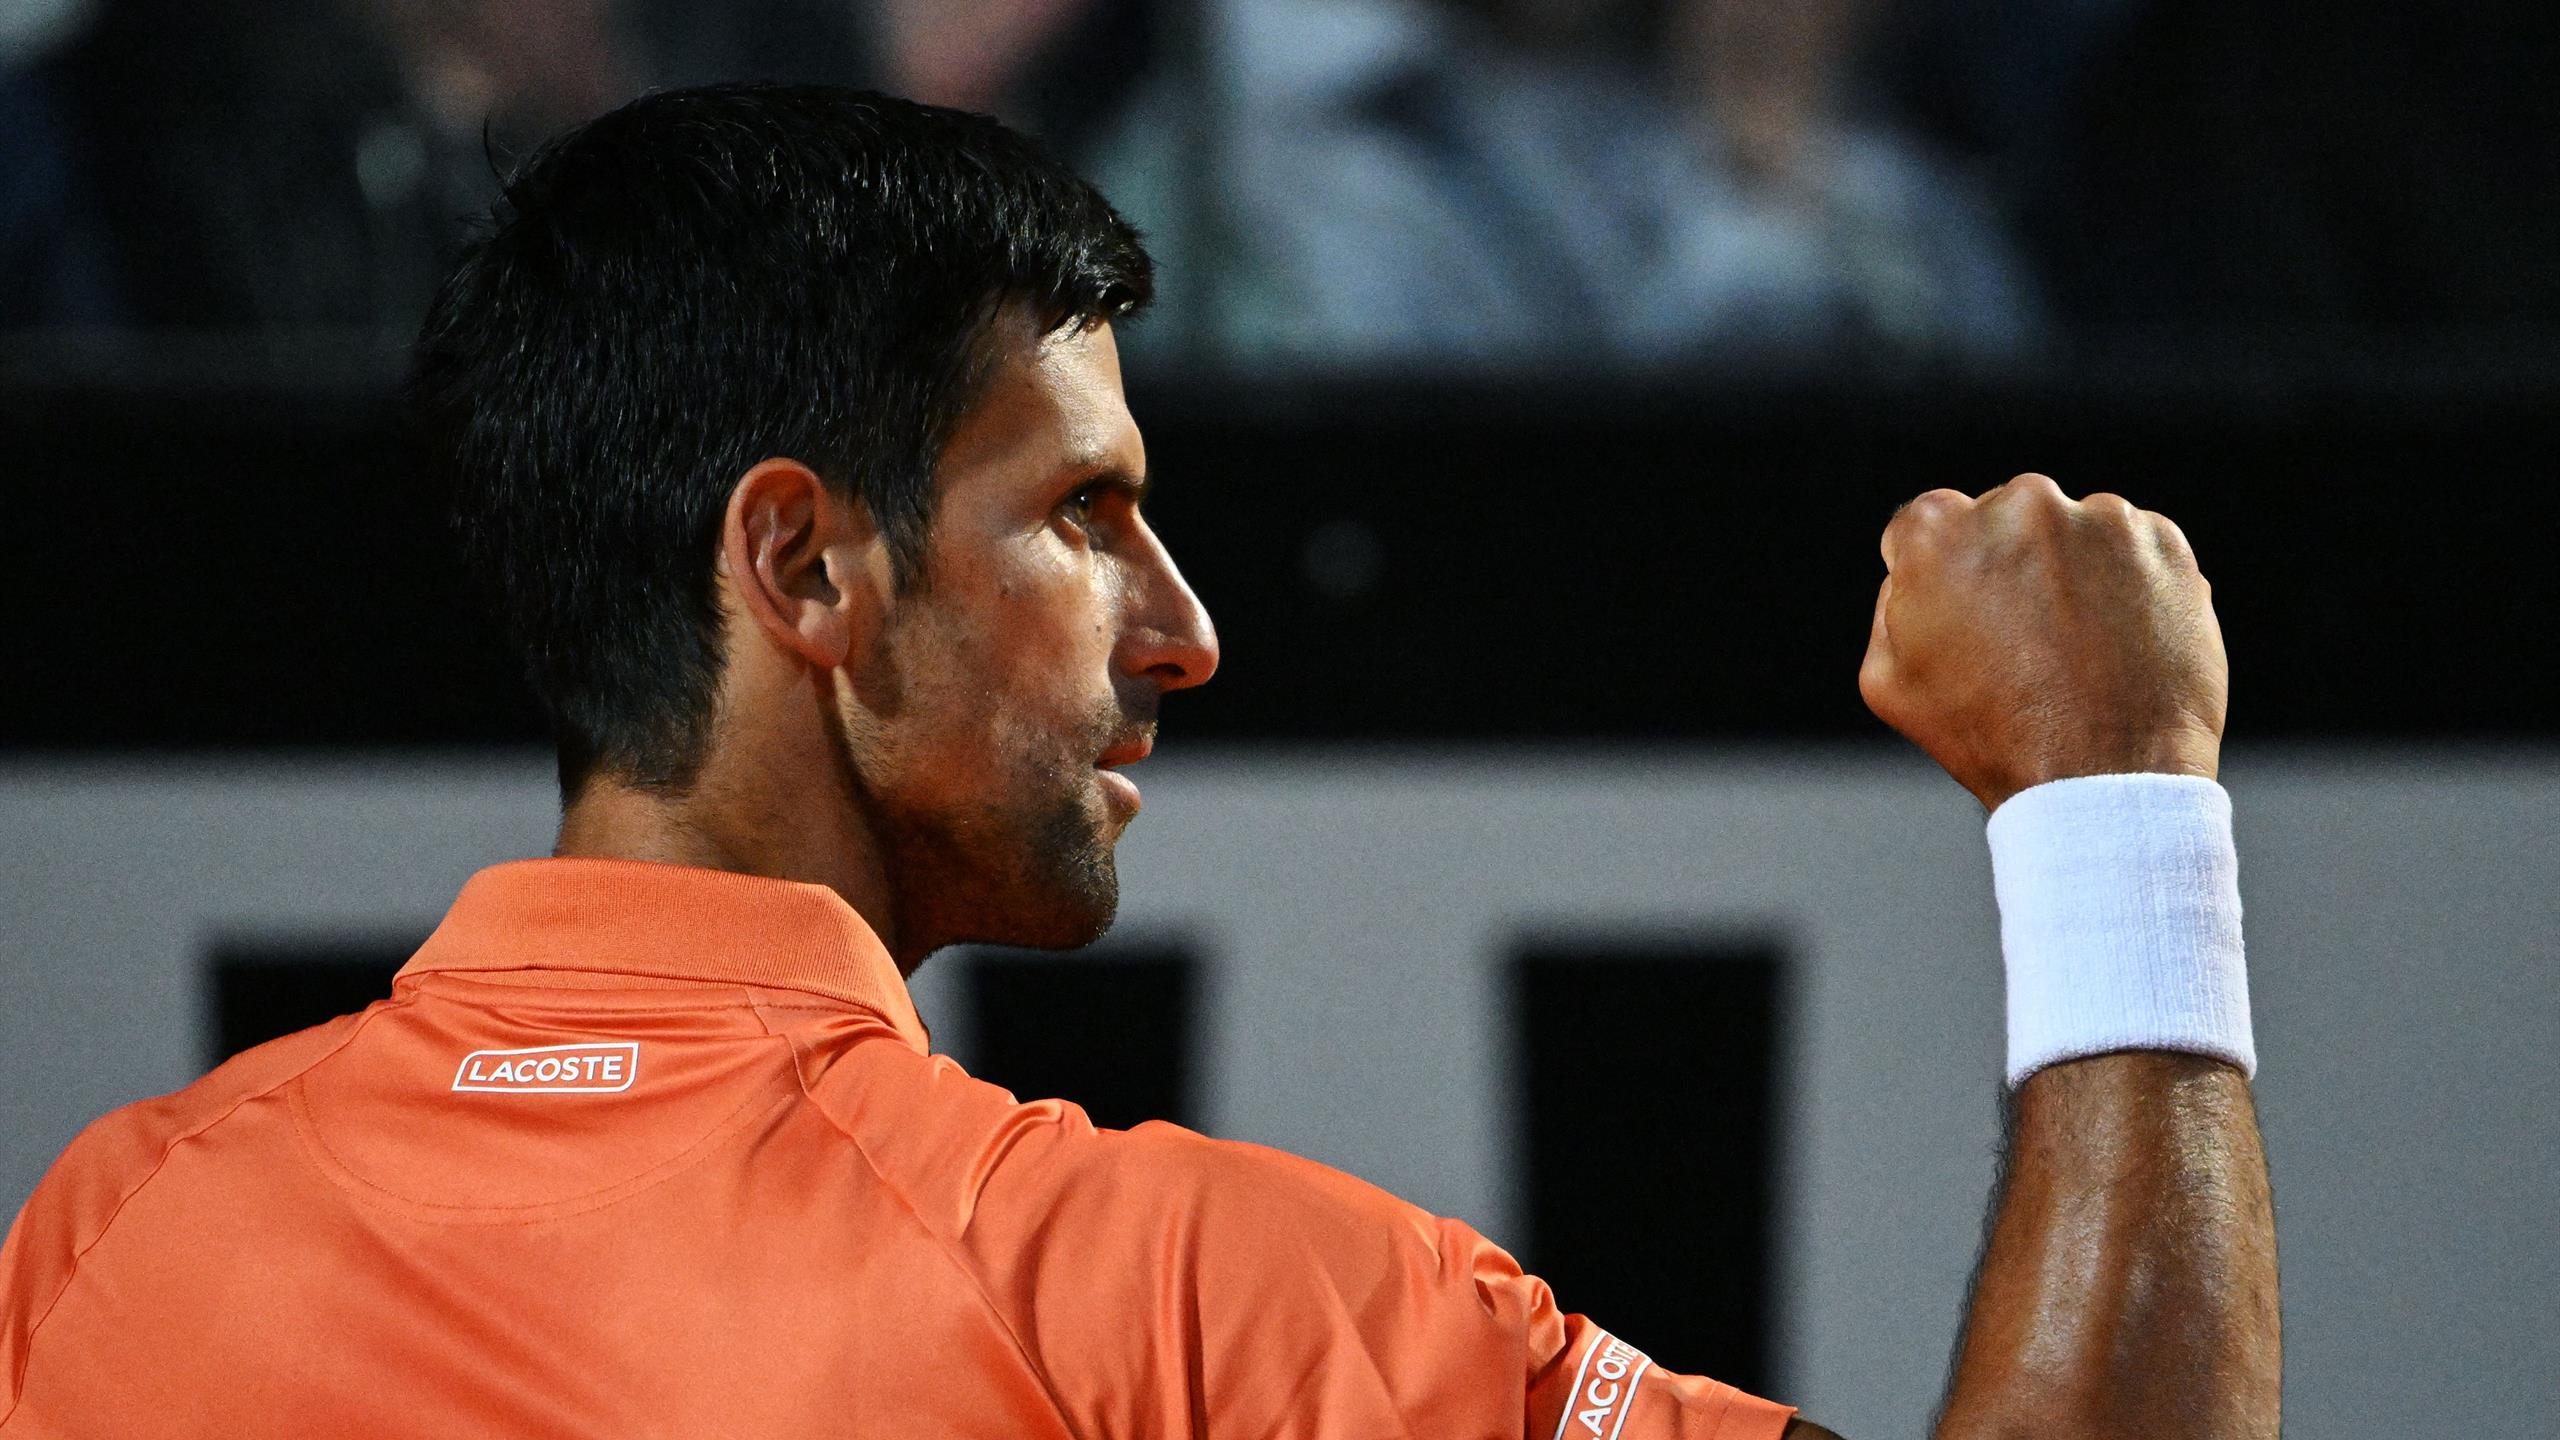 Follow the final of the Masters 1000 Rome Djokovic - Tsitsipas on the Eurosport App